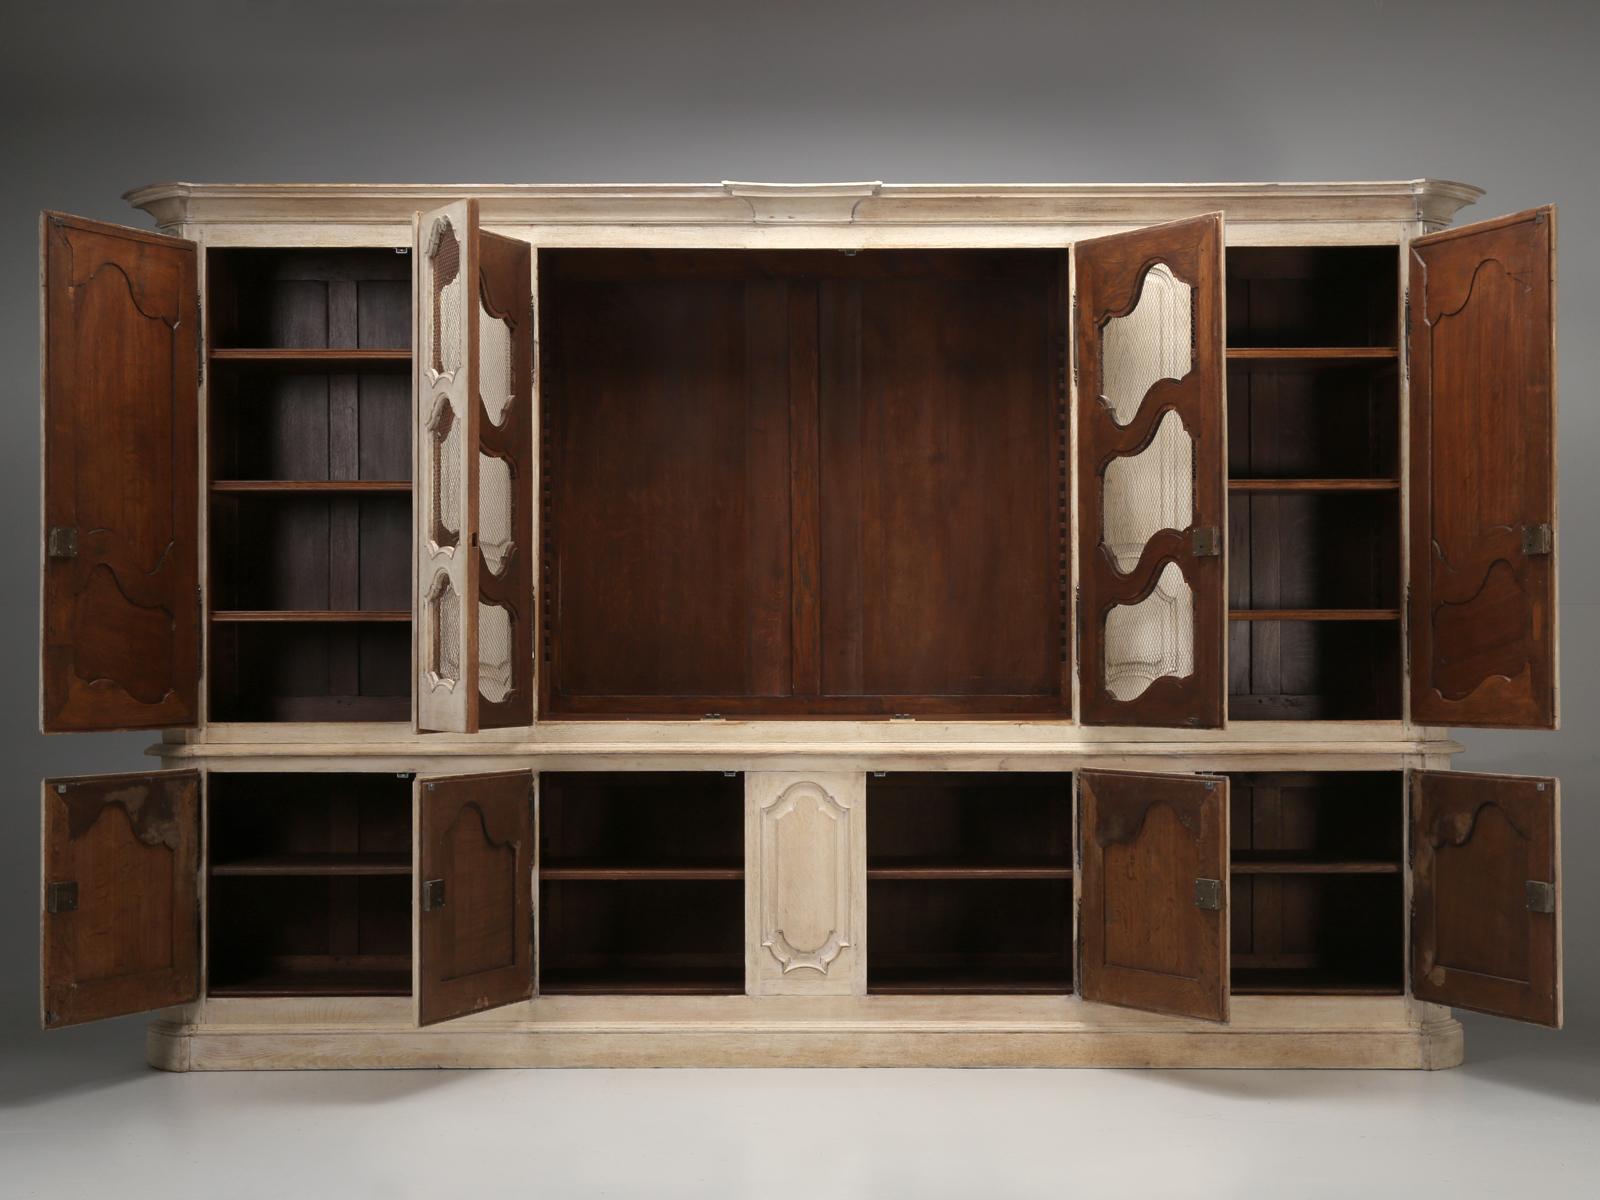 Antique French Bookcase or Cabinet in Limed White Oak Older Restoration c1800's For Sale 6